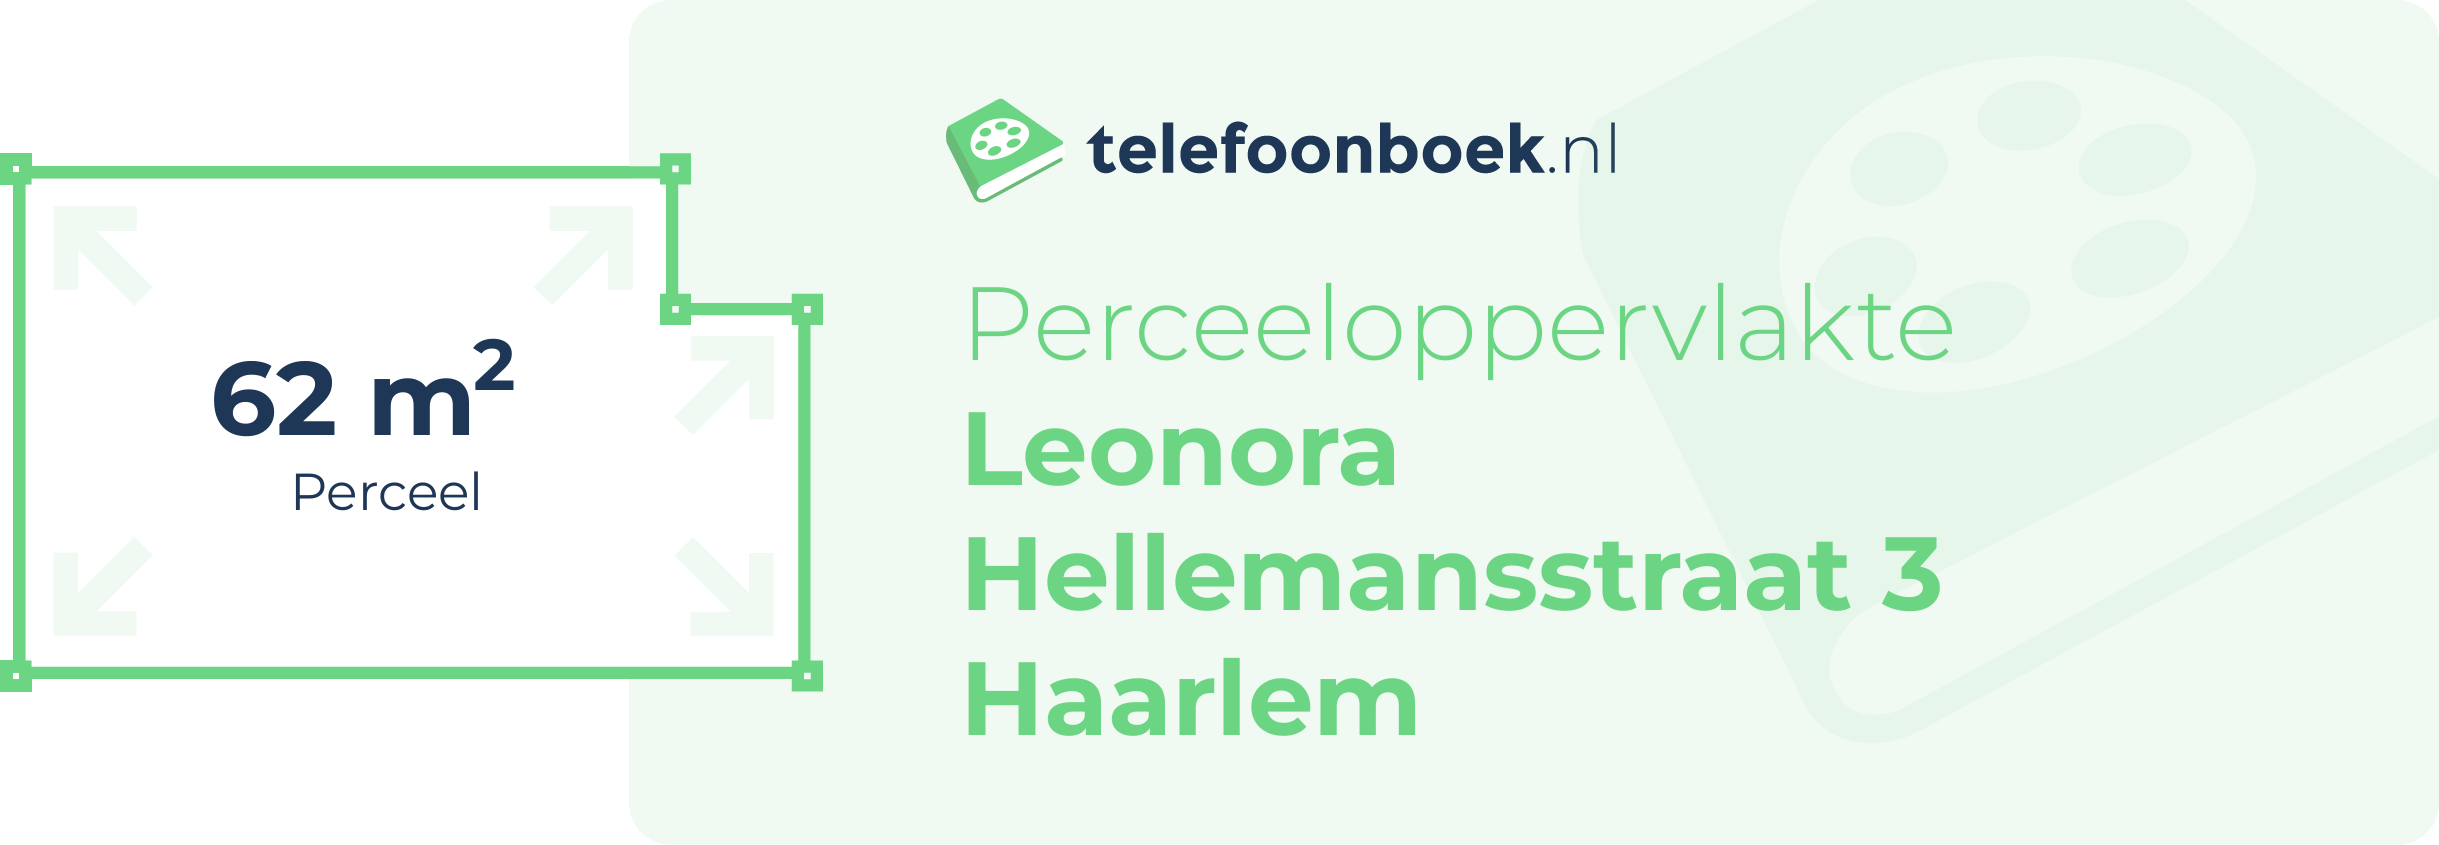 Perceeloppervlakte Leonora Hellemansstraat 3 Haarlem